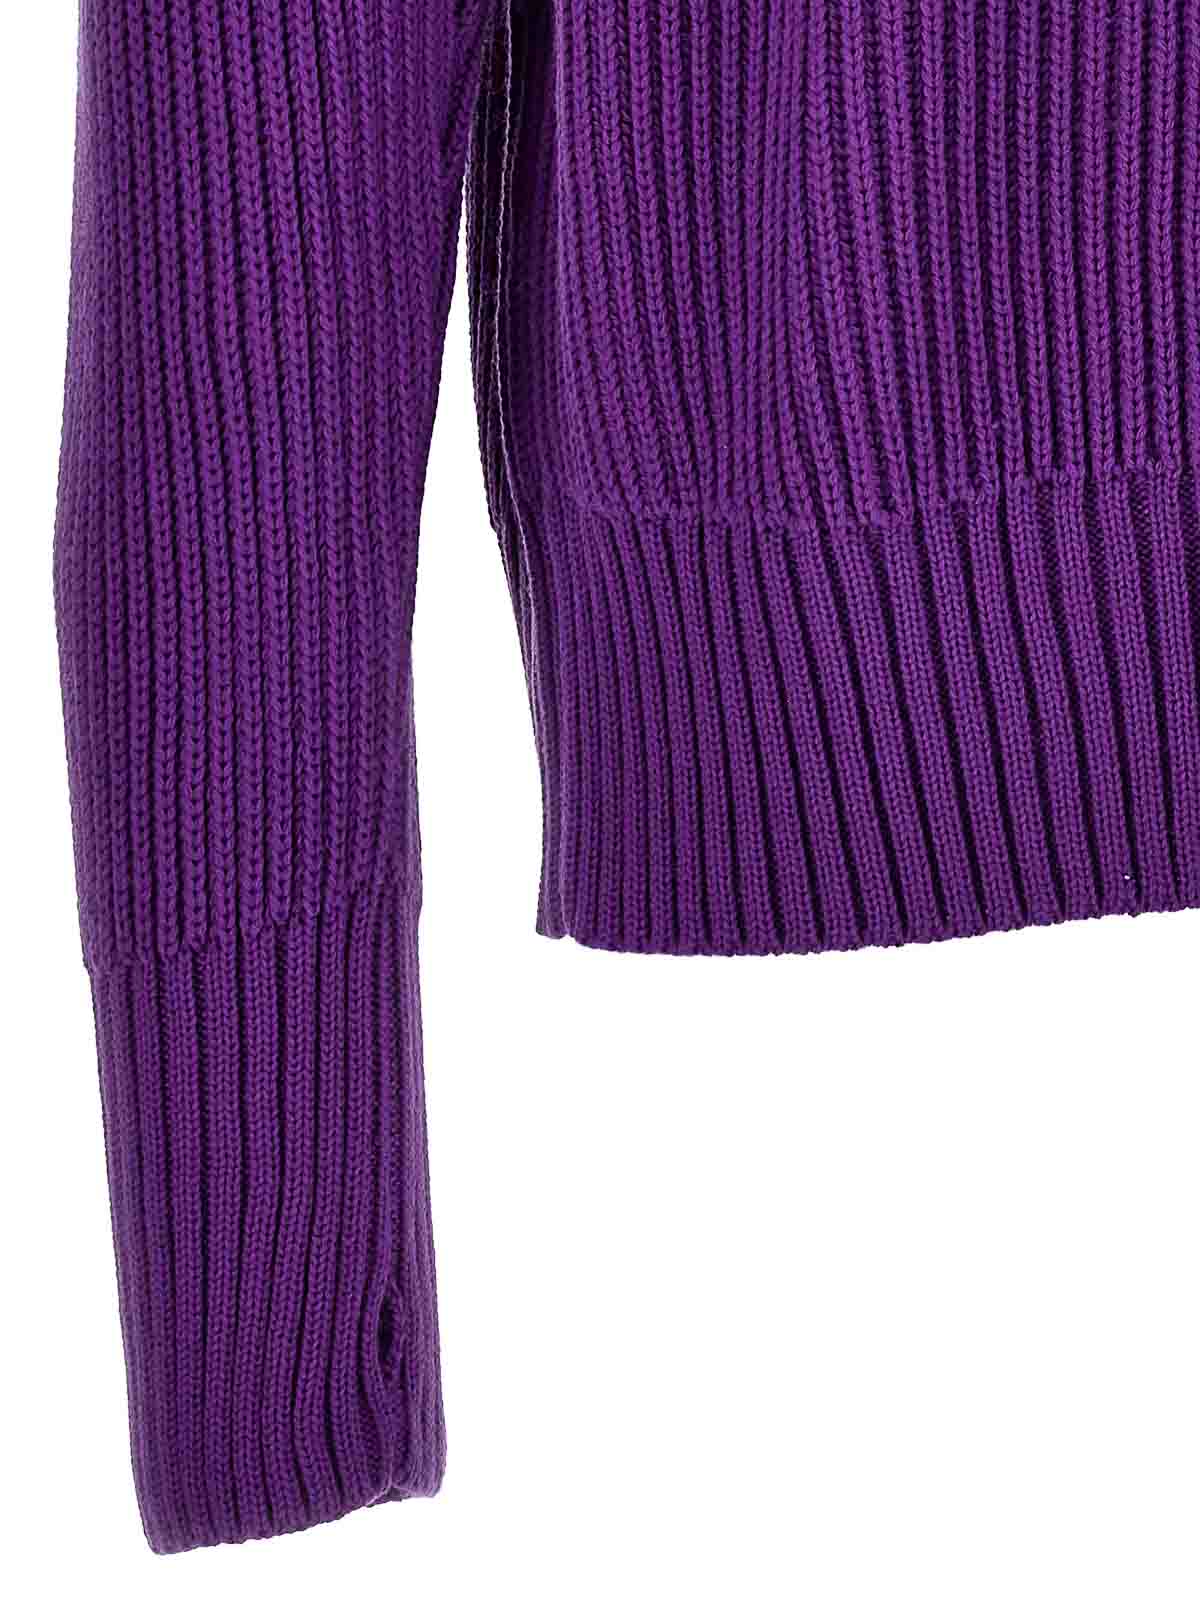 Shop Lc23 Cárdigan - Púrpura In Purple